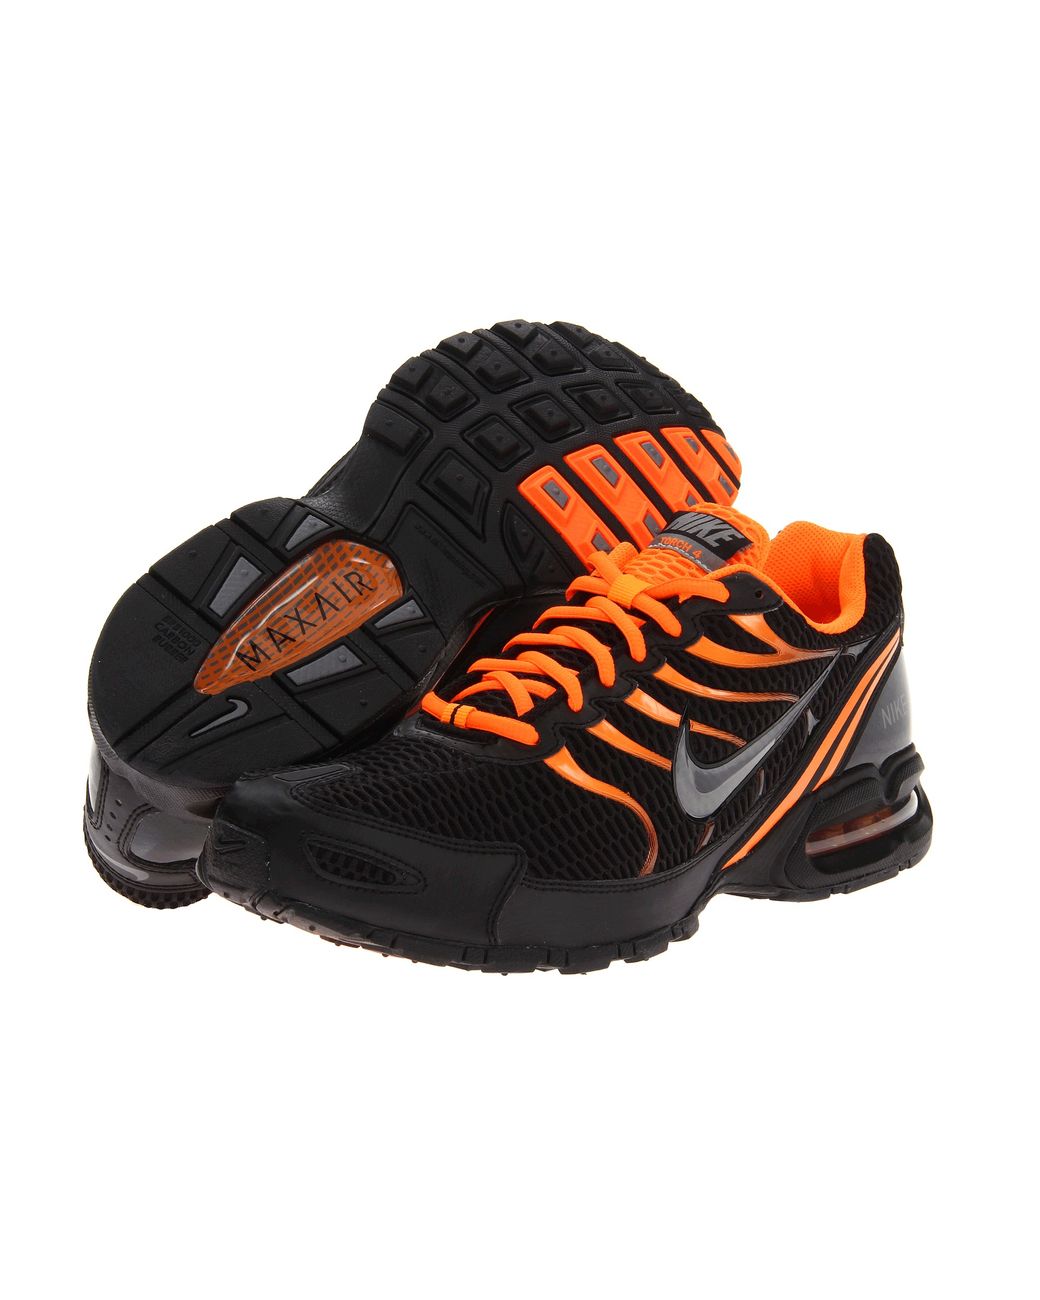 nike men's sneakers black and orange